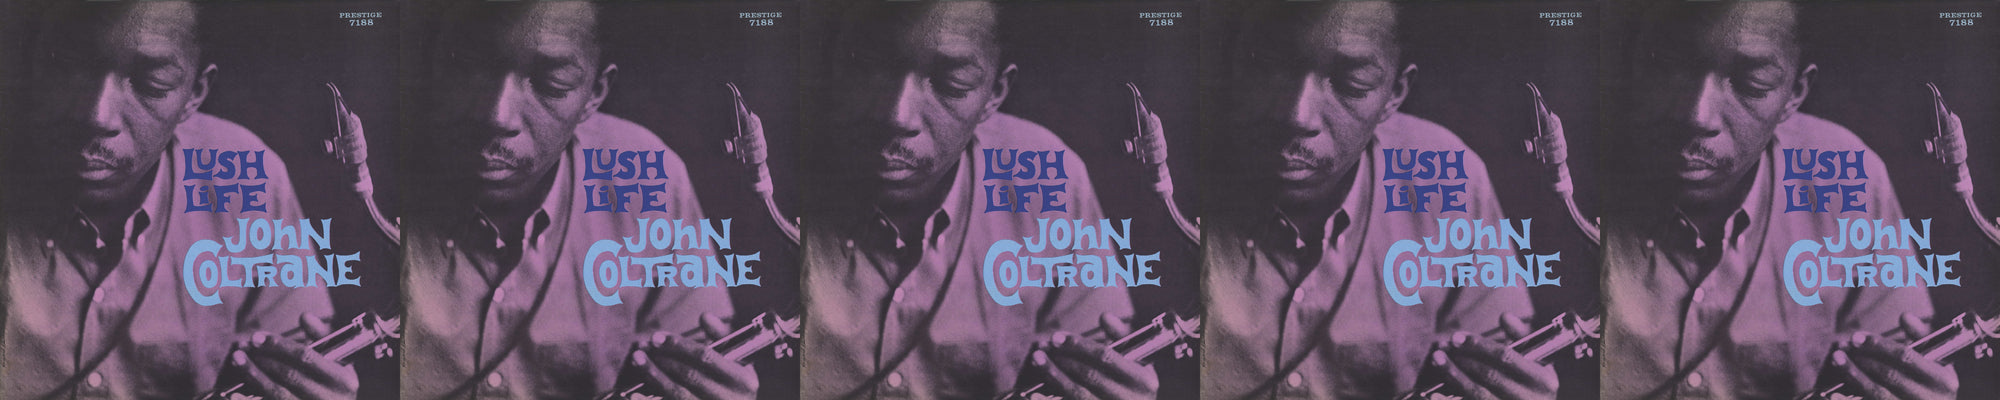 John Coltrane Lush Life